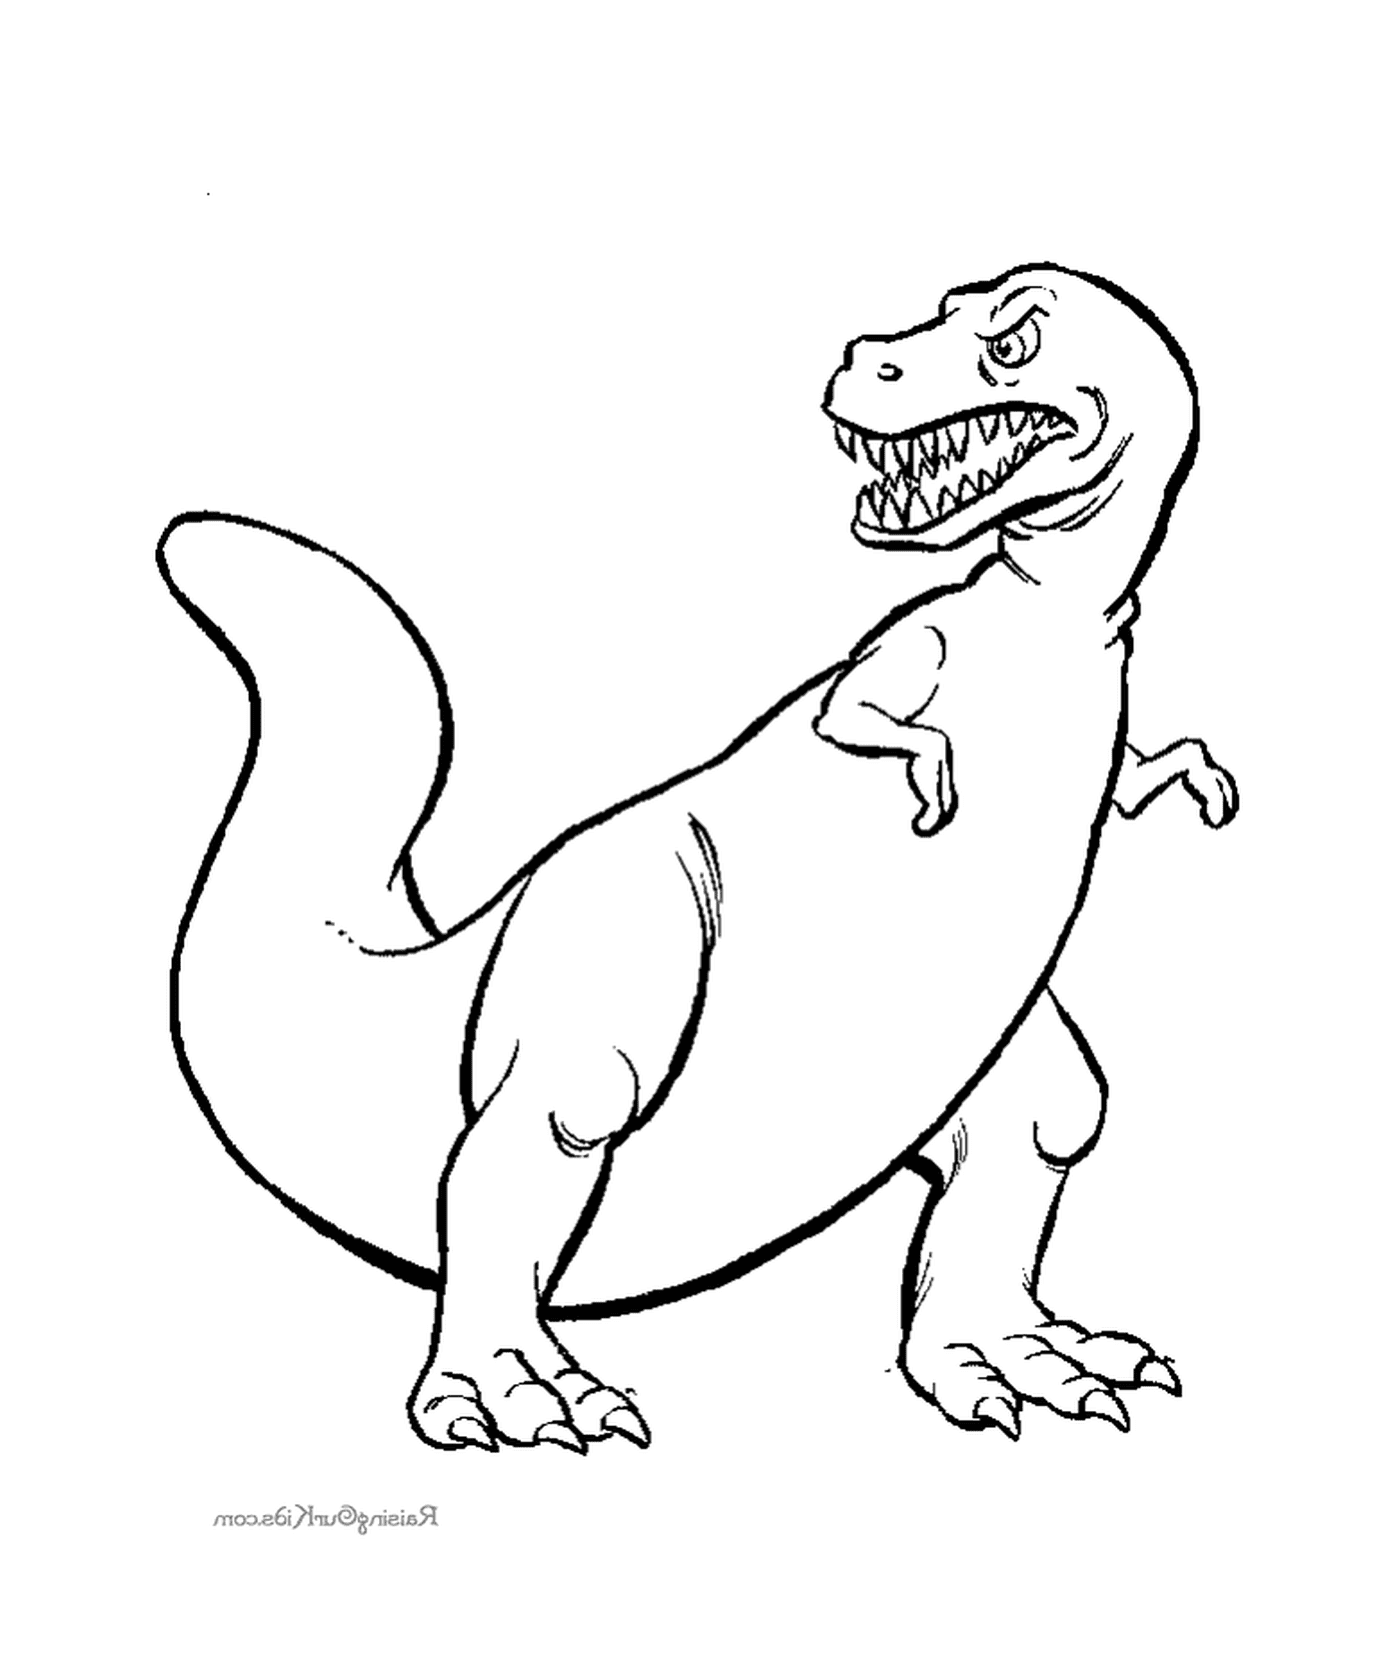  Un dinosaurio dibujado 